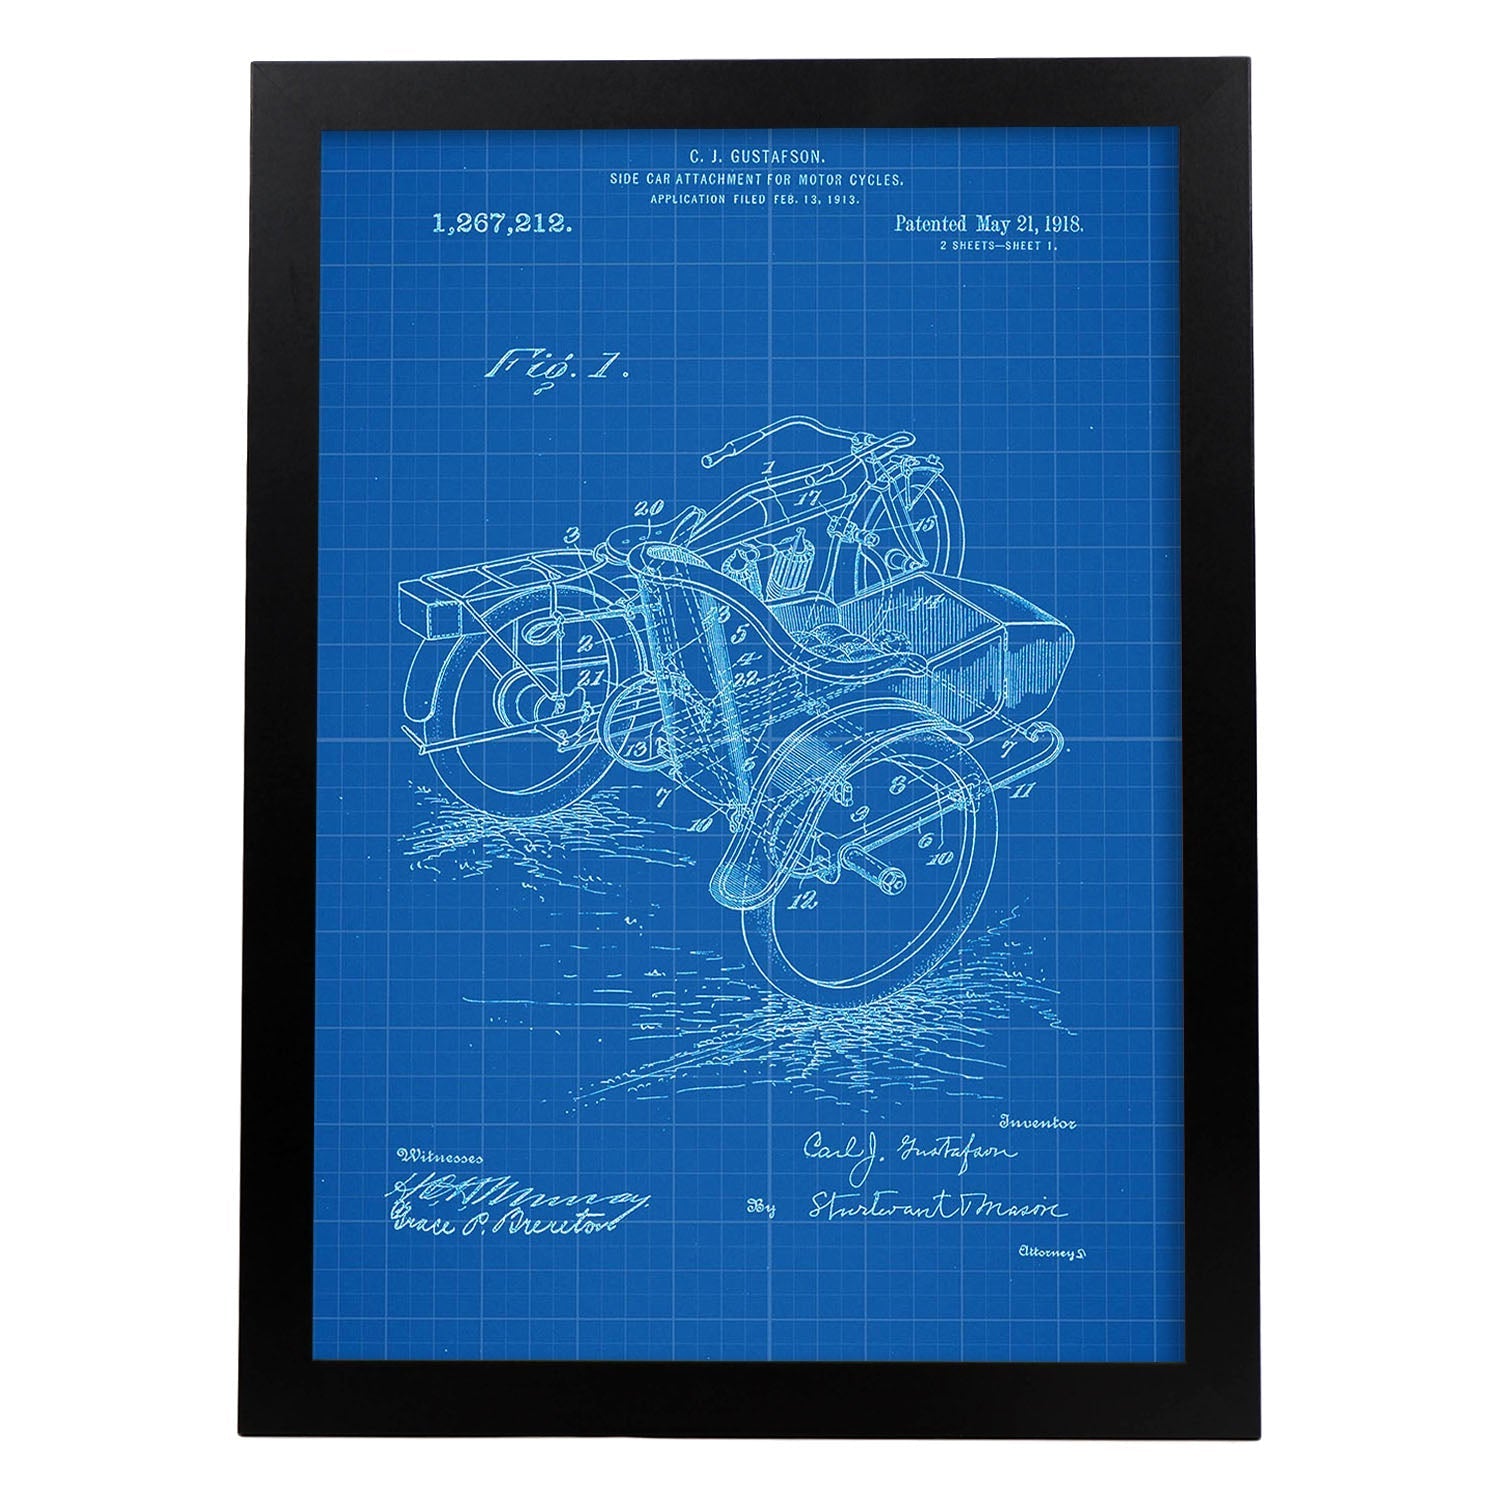 Poster con patente de Sidecar. Lámina con diseño de patente antigua-Artwork-Nacnic-A3-Marco Negro-Nacnic Estudio SL